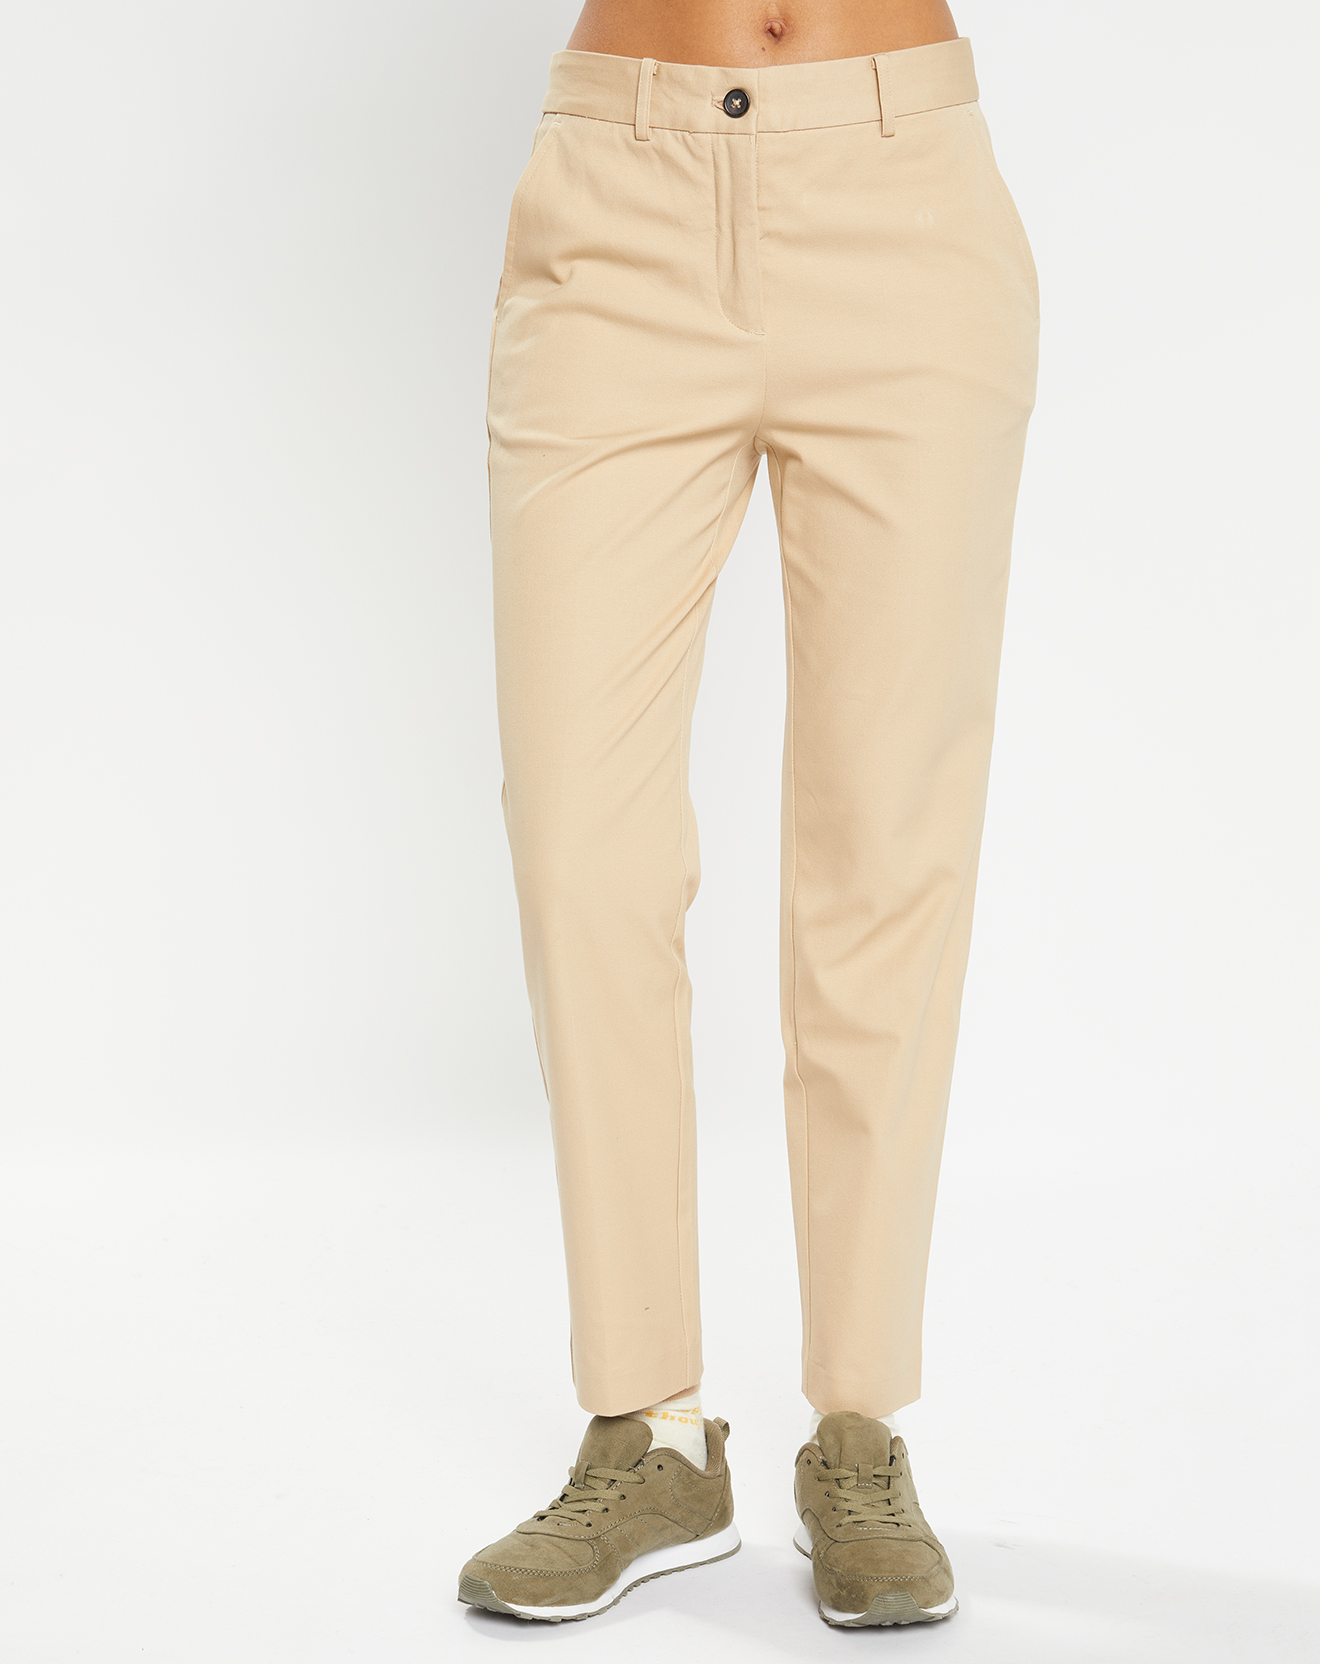 jodhpur - pantalon chino mistral beige